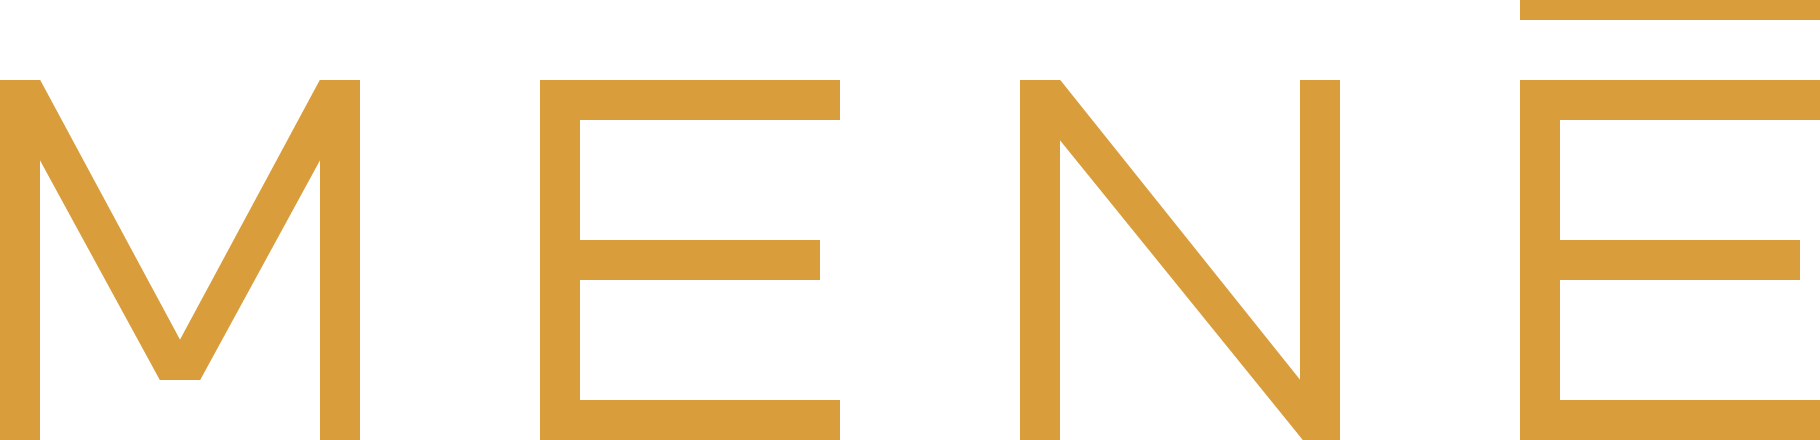 Menē Logo